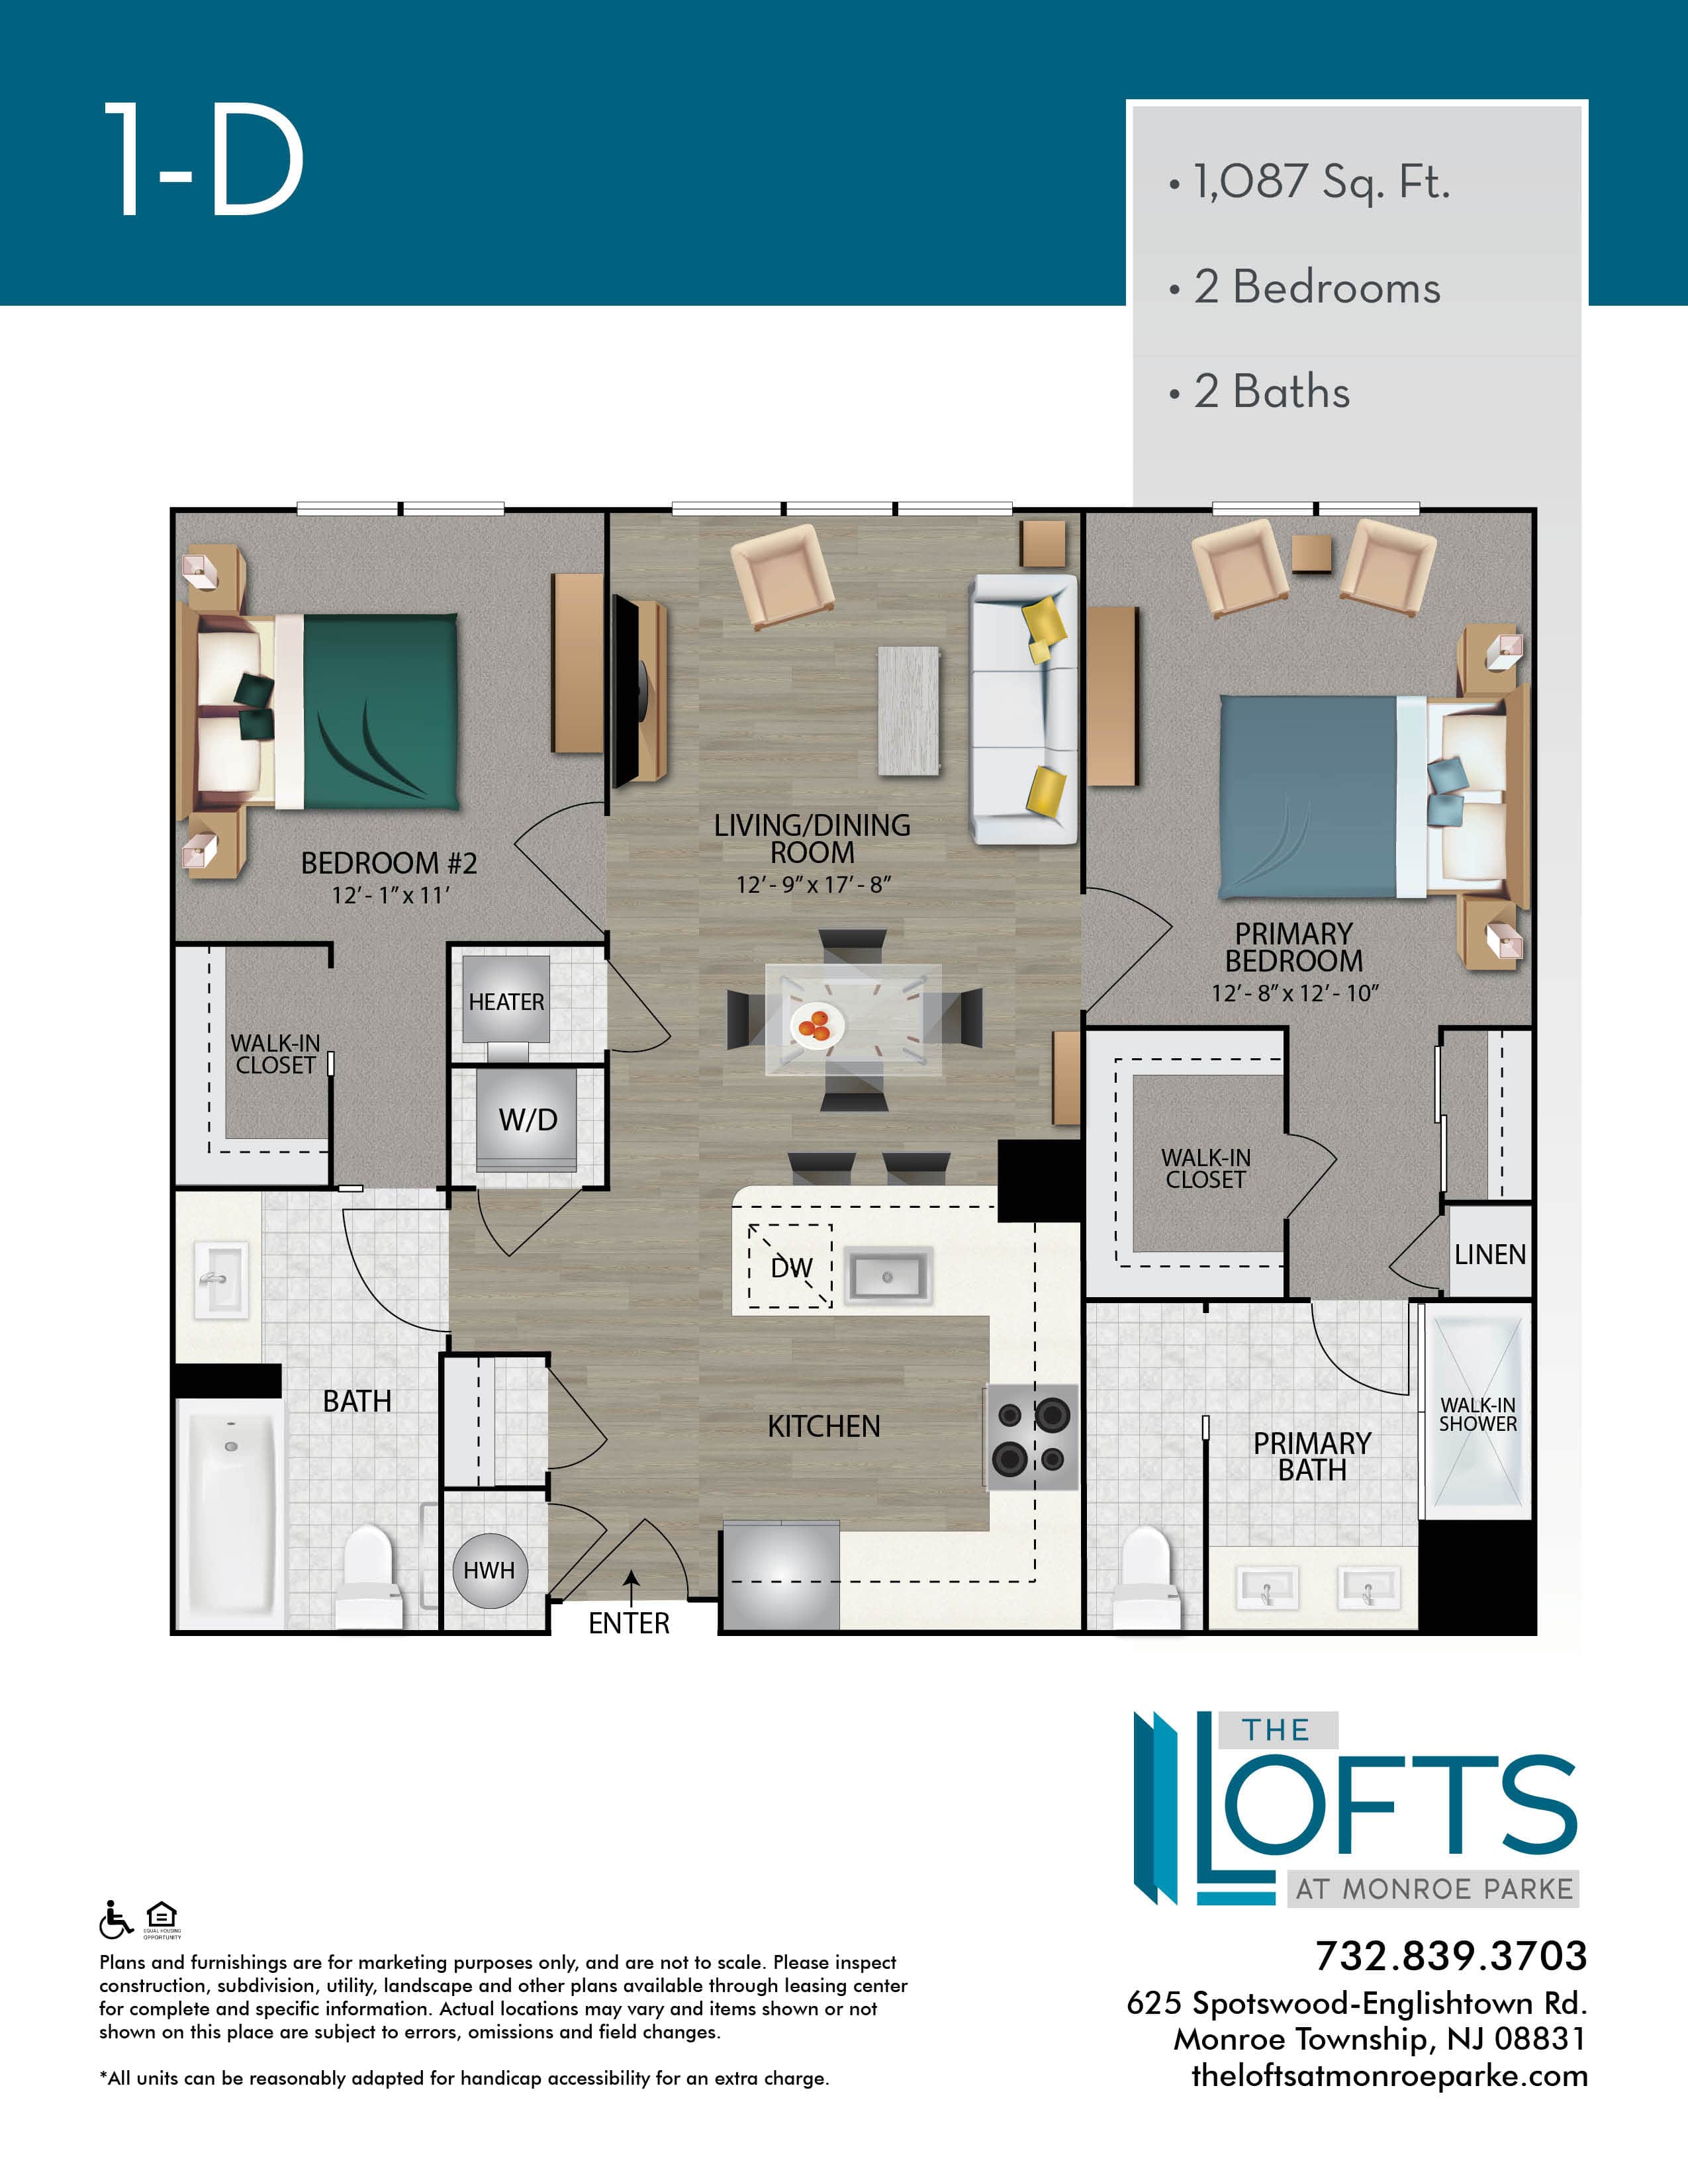 The Lofts at Monroe Park Apartment Floor Plan 1D